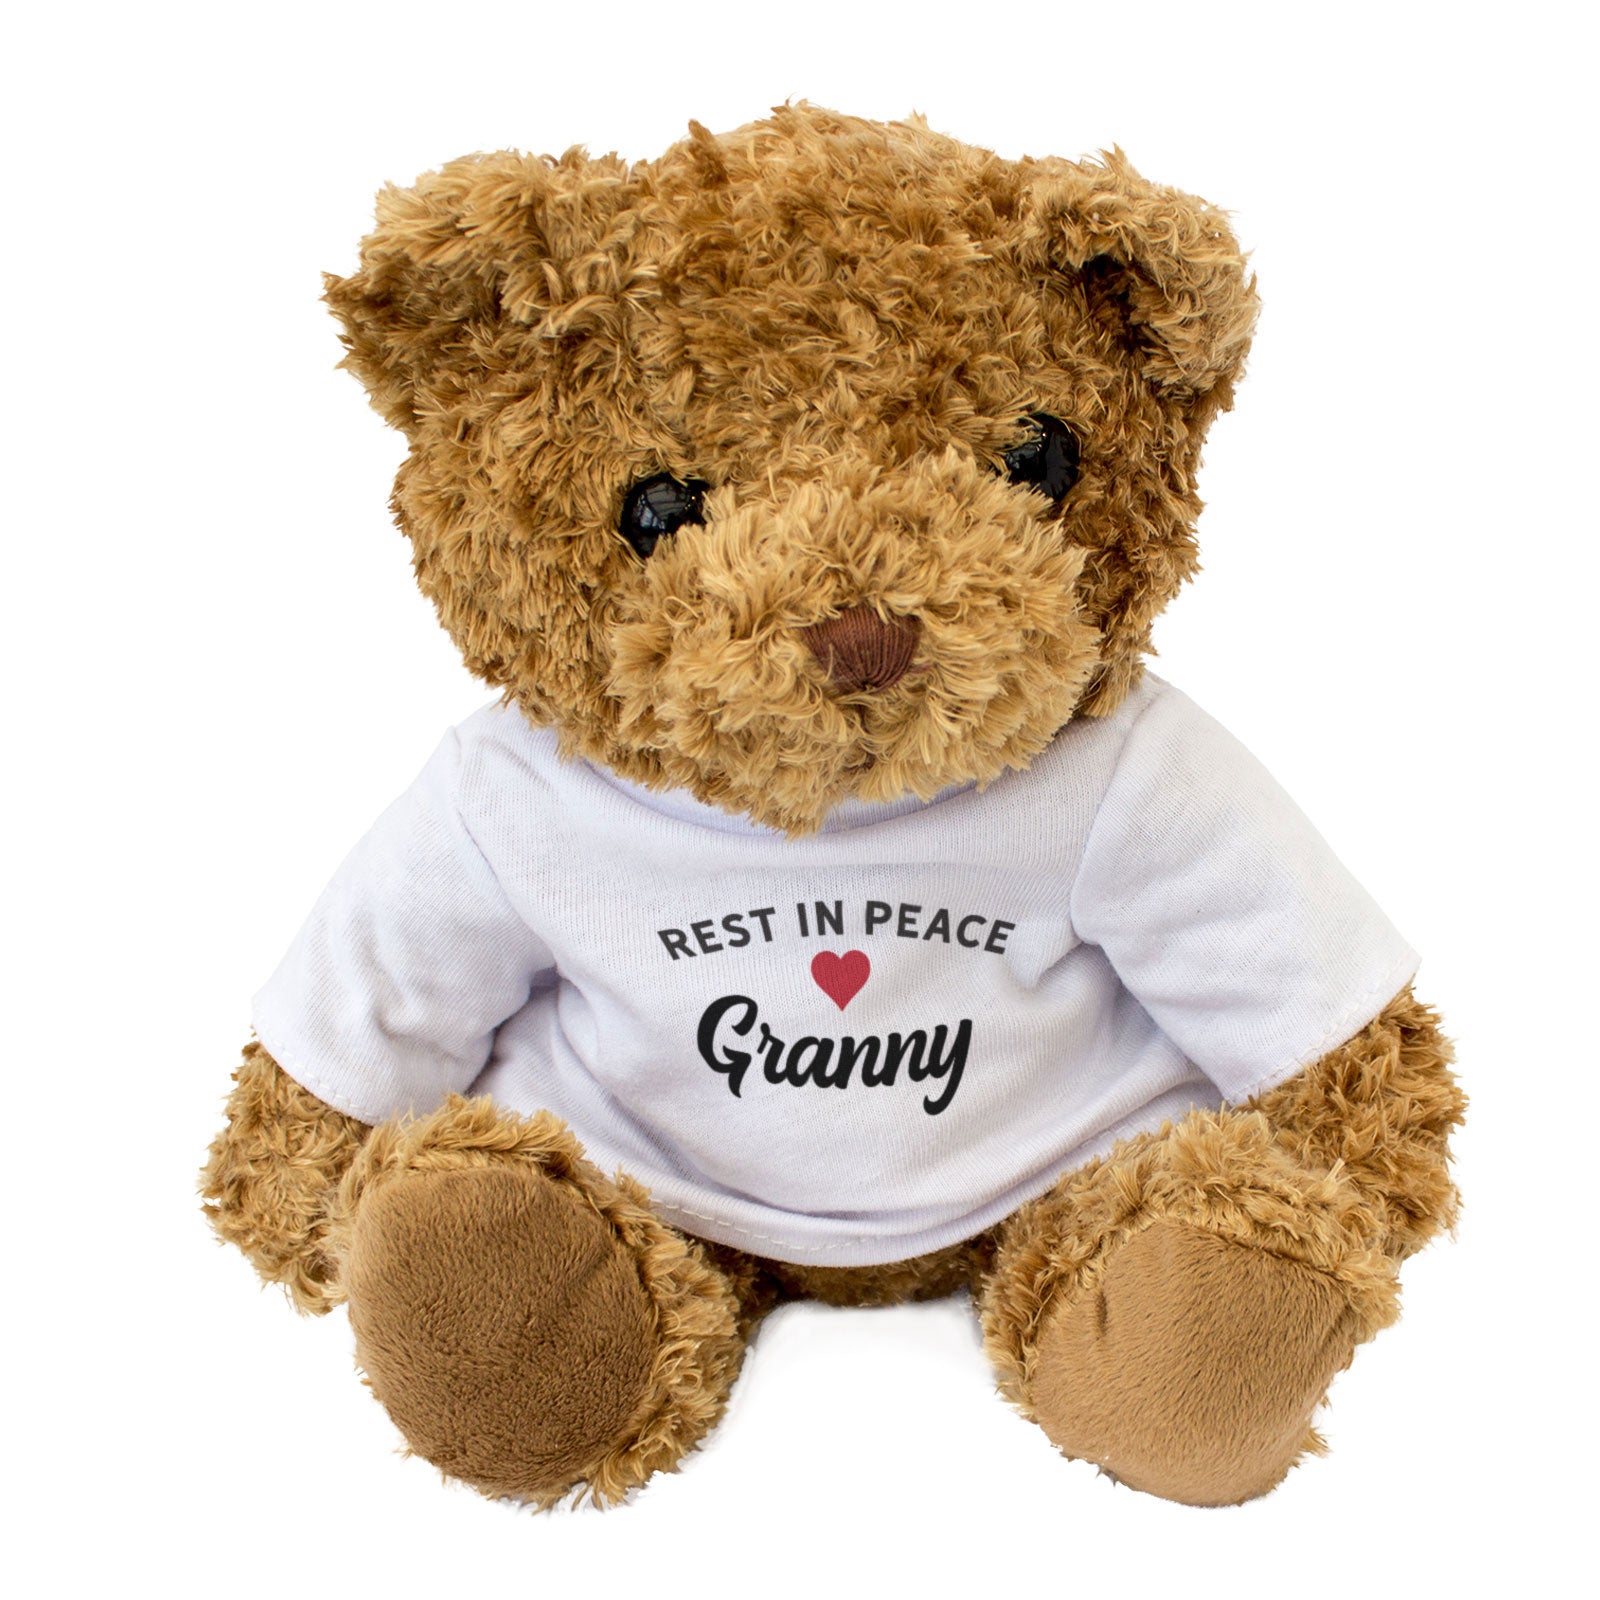 RIP Granny - Teddy Bear - Rest In Peace